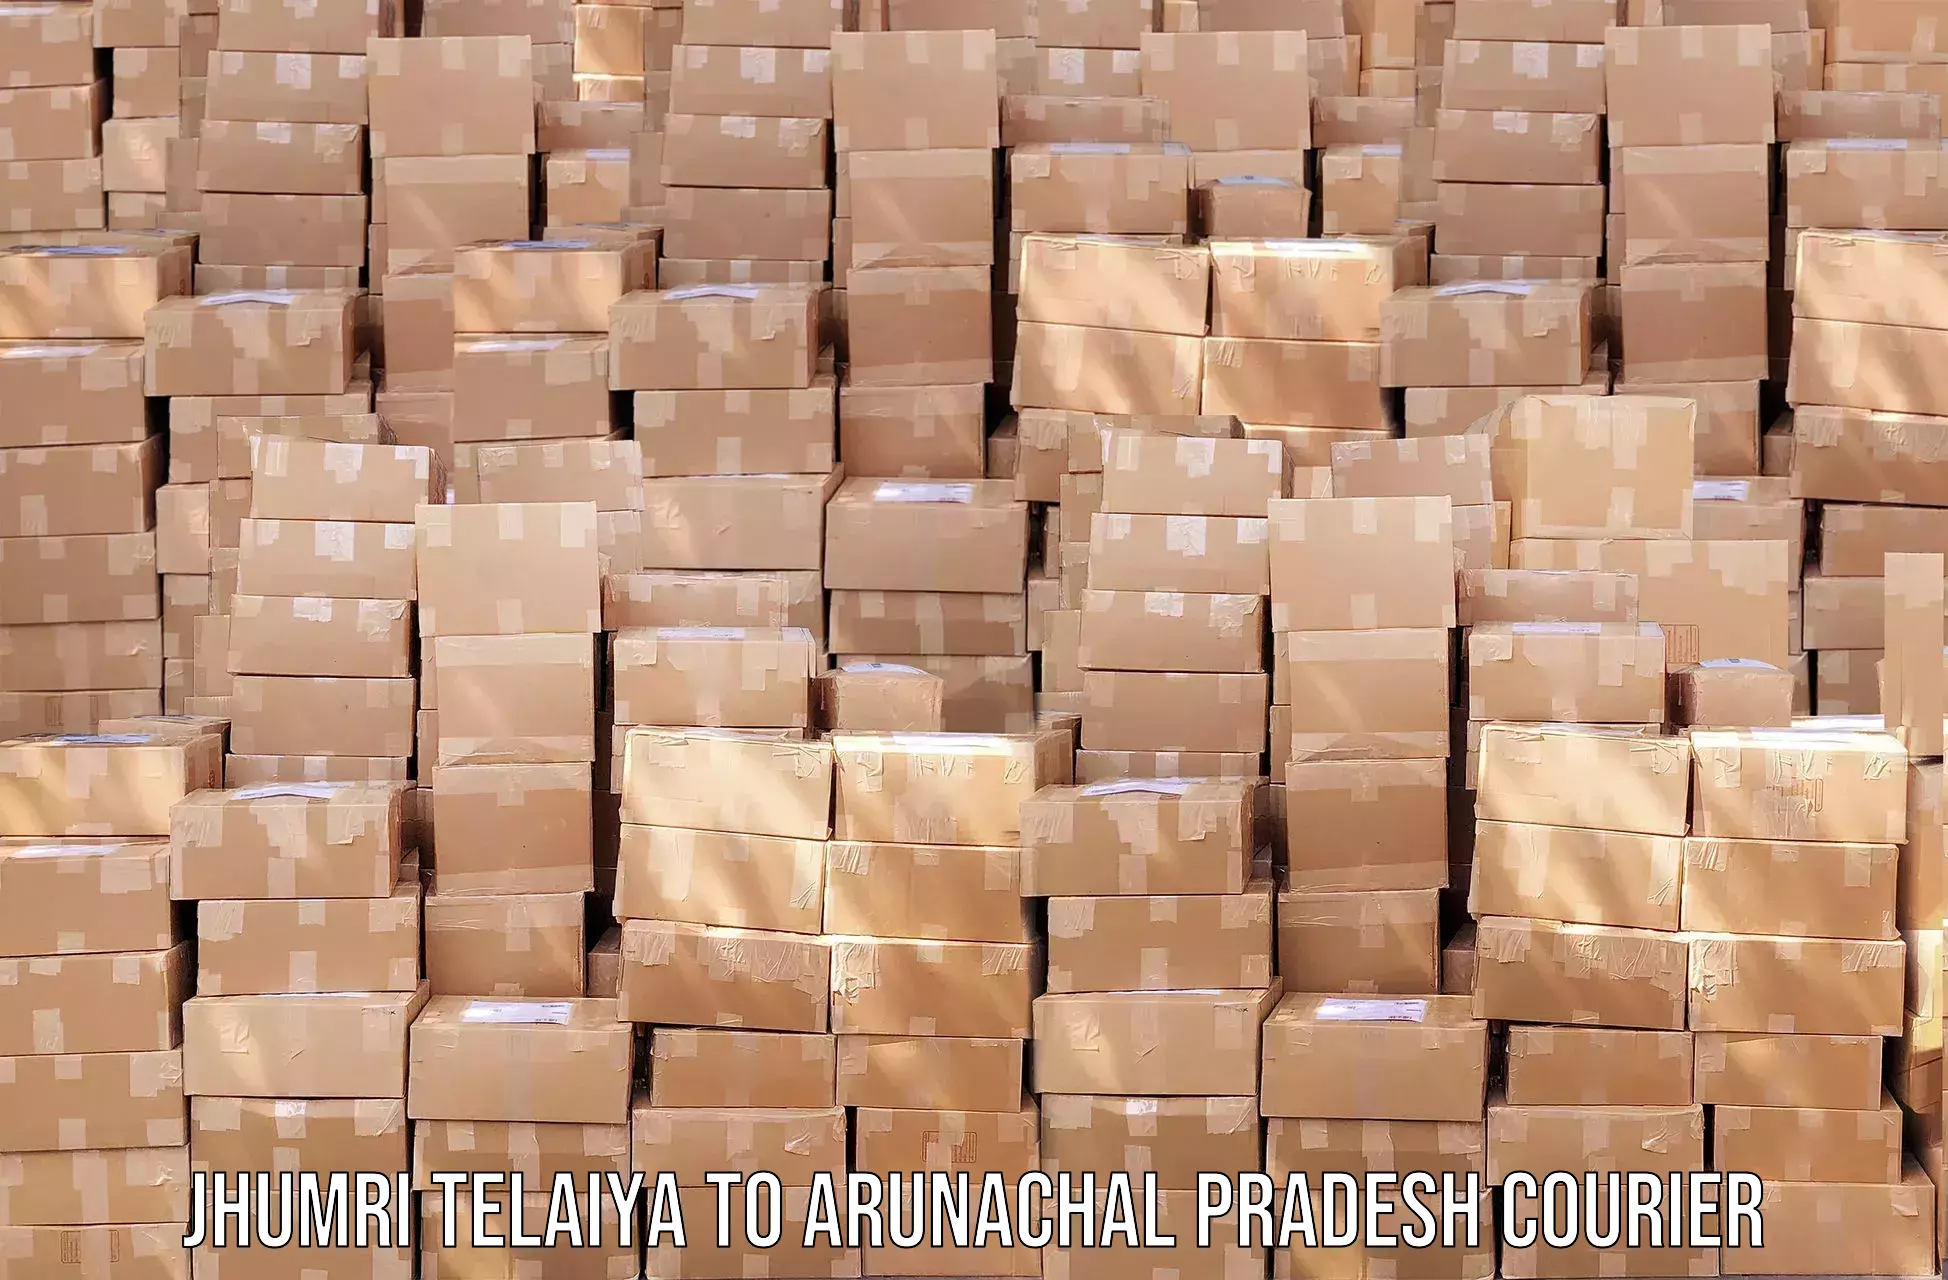 Custom courier packaging Jhumri Telaiya to Aalo